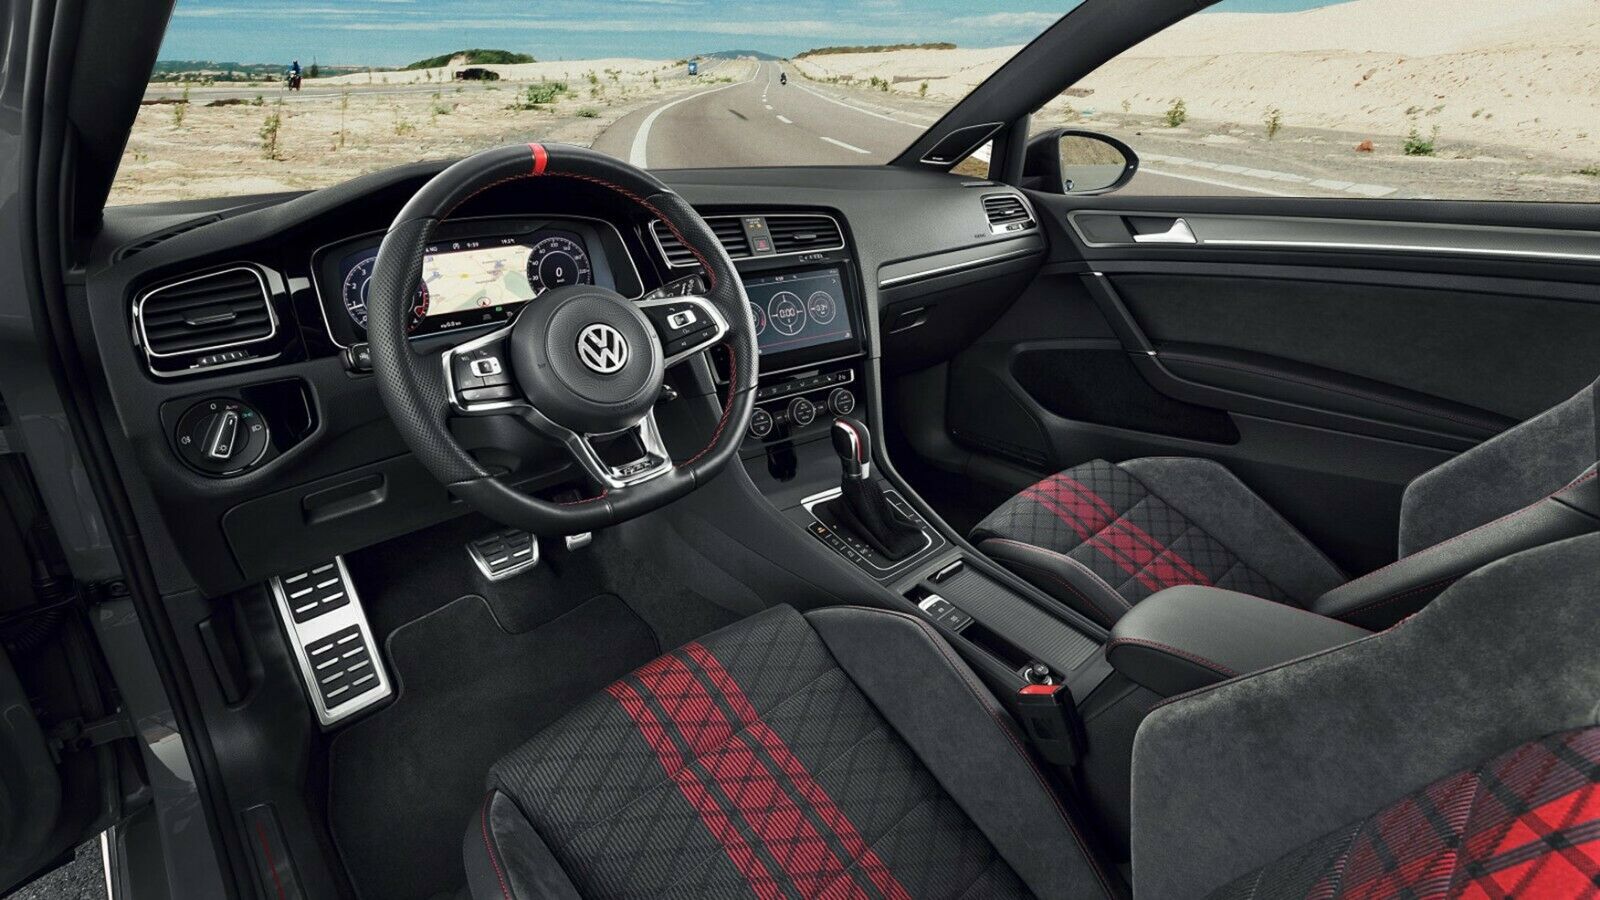 VW Golf GTI TCR Interior Fabric Diamond Striped - £43.00 / Metre